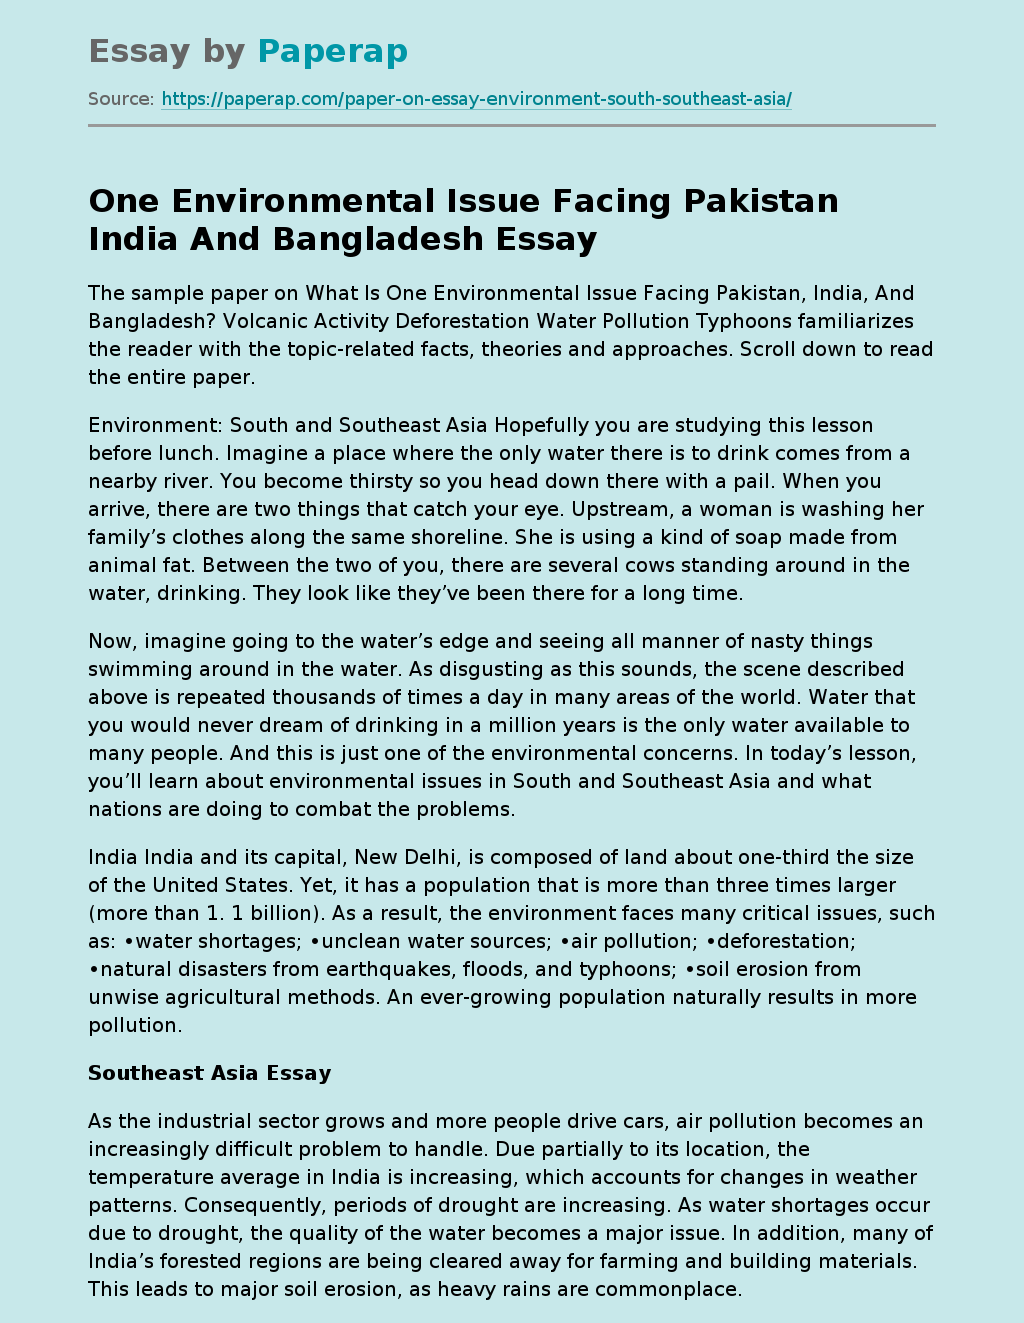 One Environmental Issue Facing Pakistan India And Bangladesh